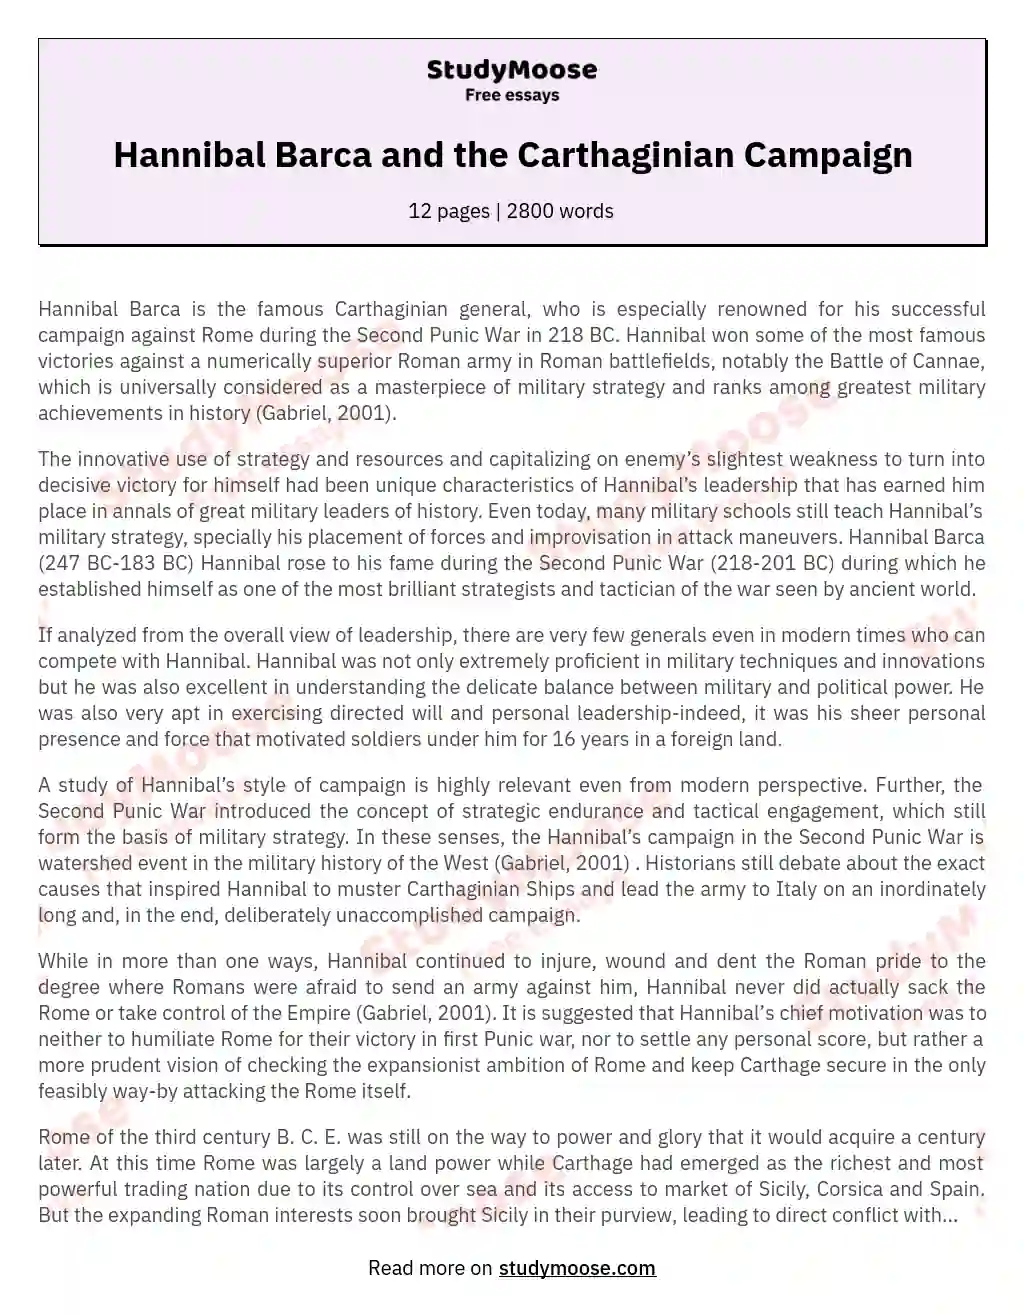 Hannibal Barca and the Carthaginian Campaign essay